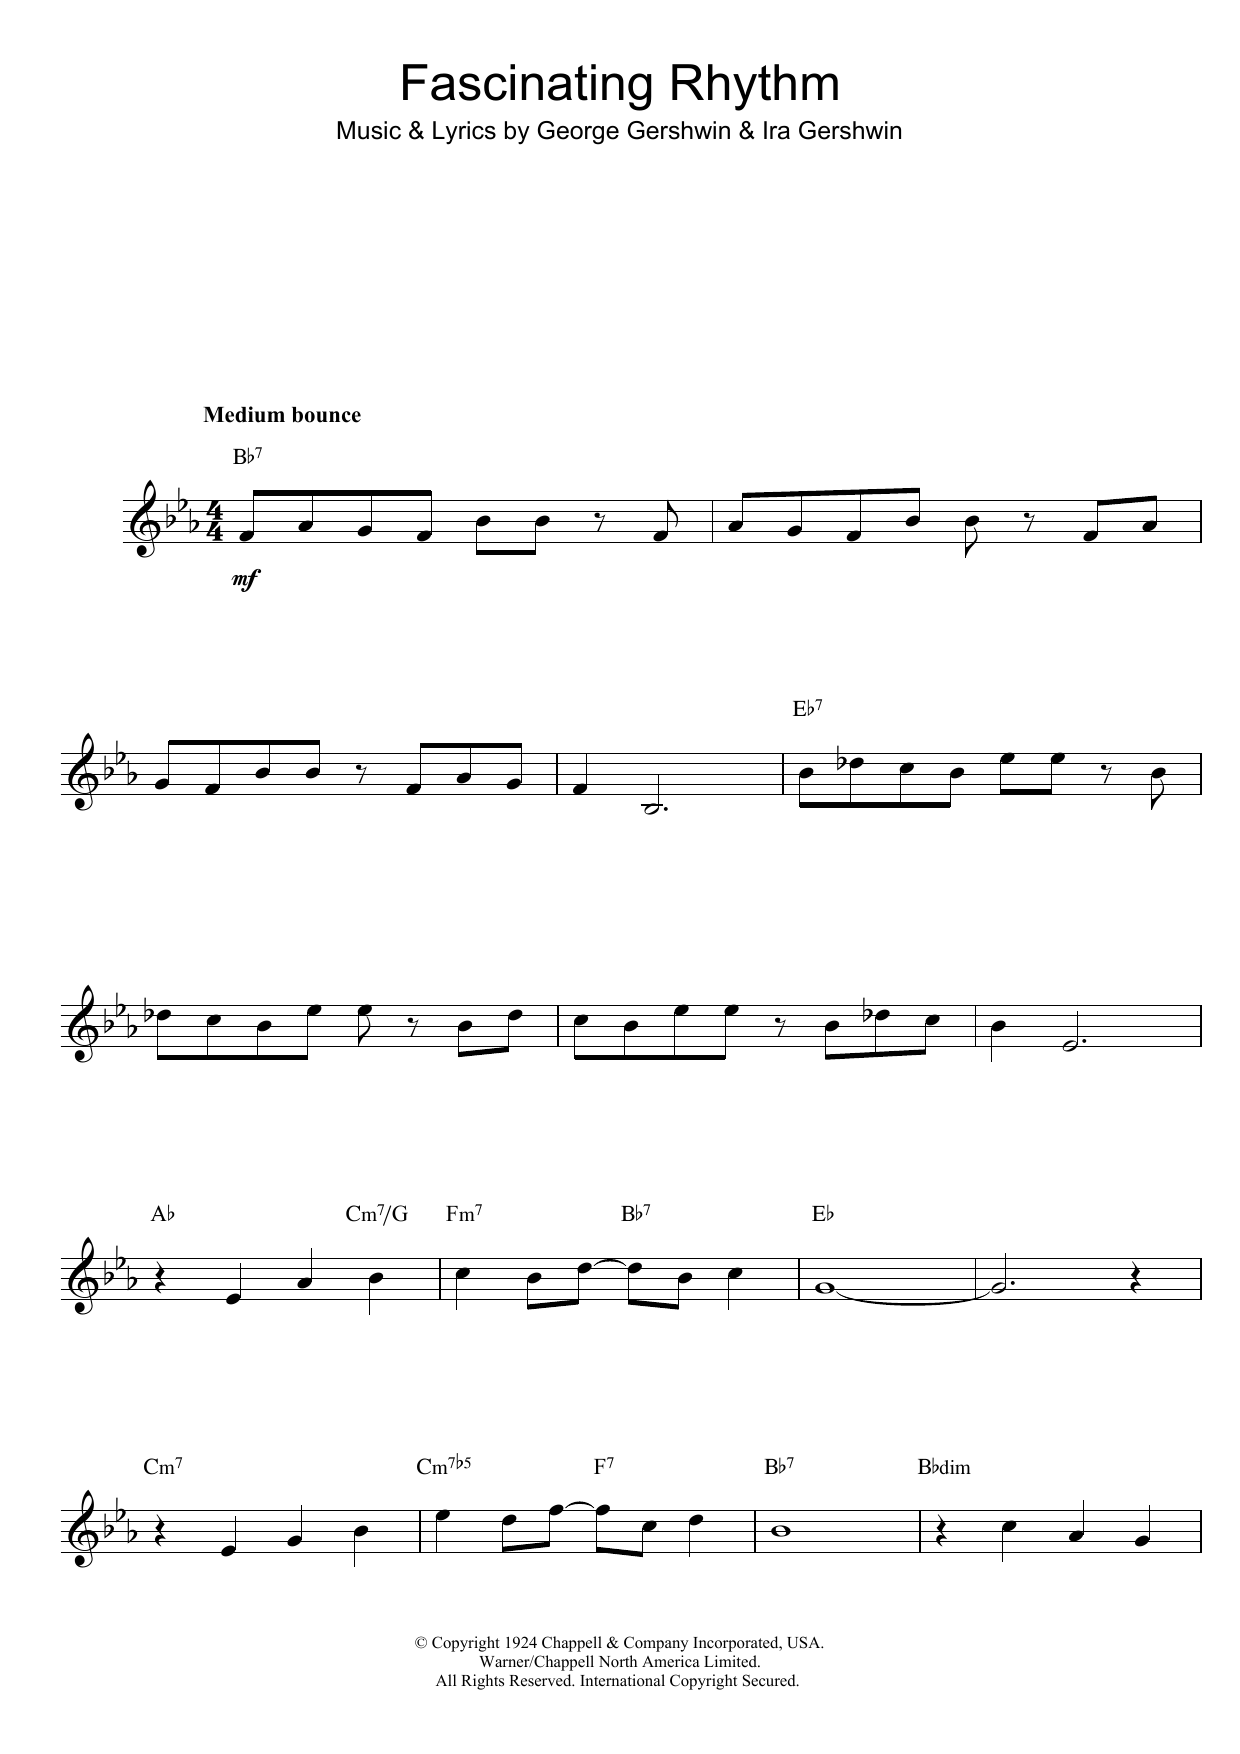 George Gershwin Fascinating Rhythm Sheet Music Notes & Chords for Easy Guitar Tab - Download or Print PDF